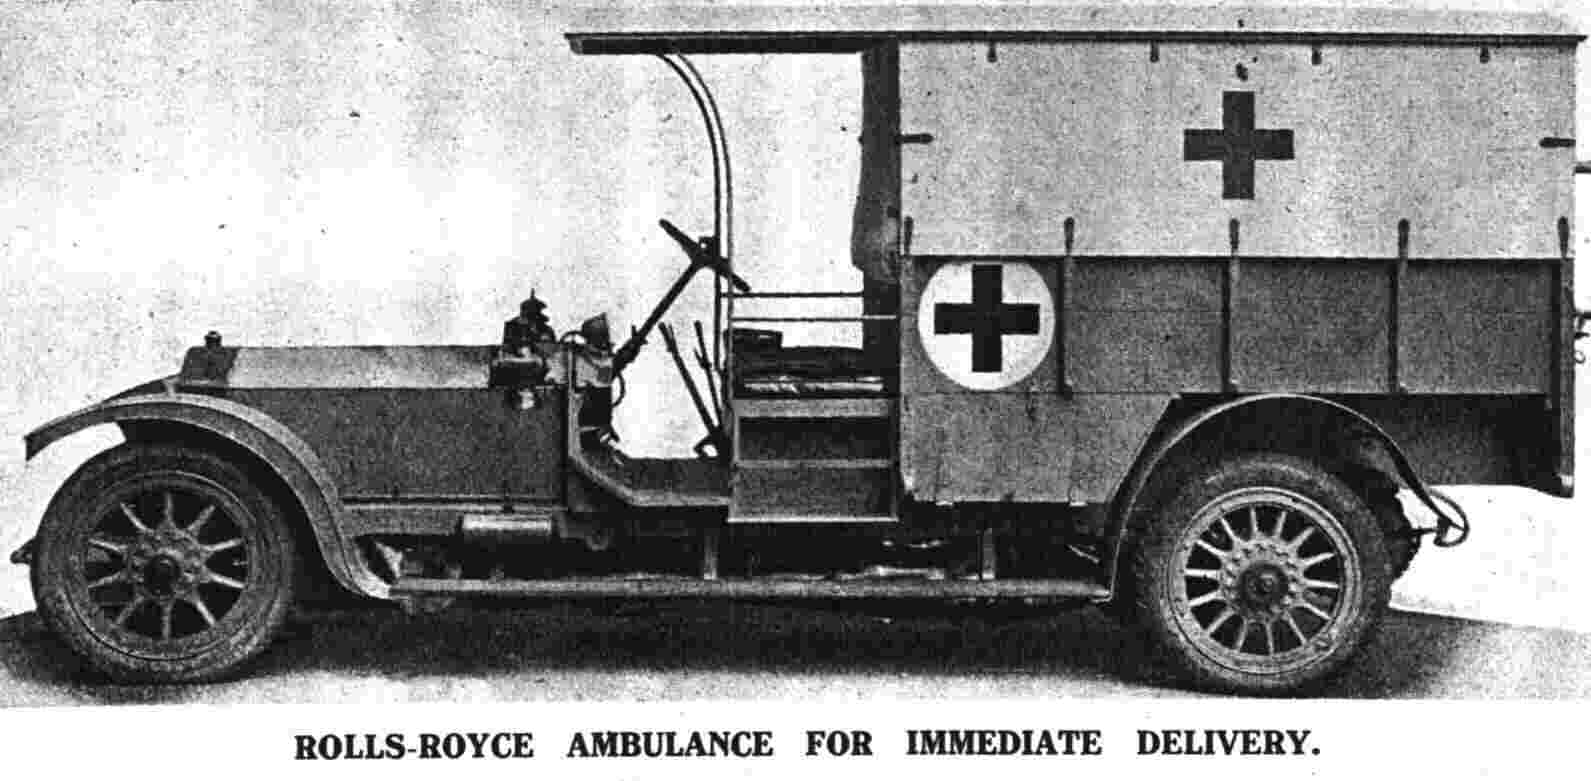 Manufacturers of ambulances